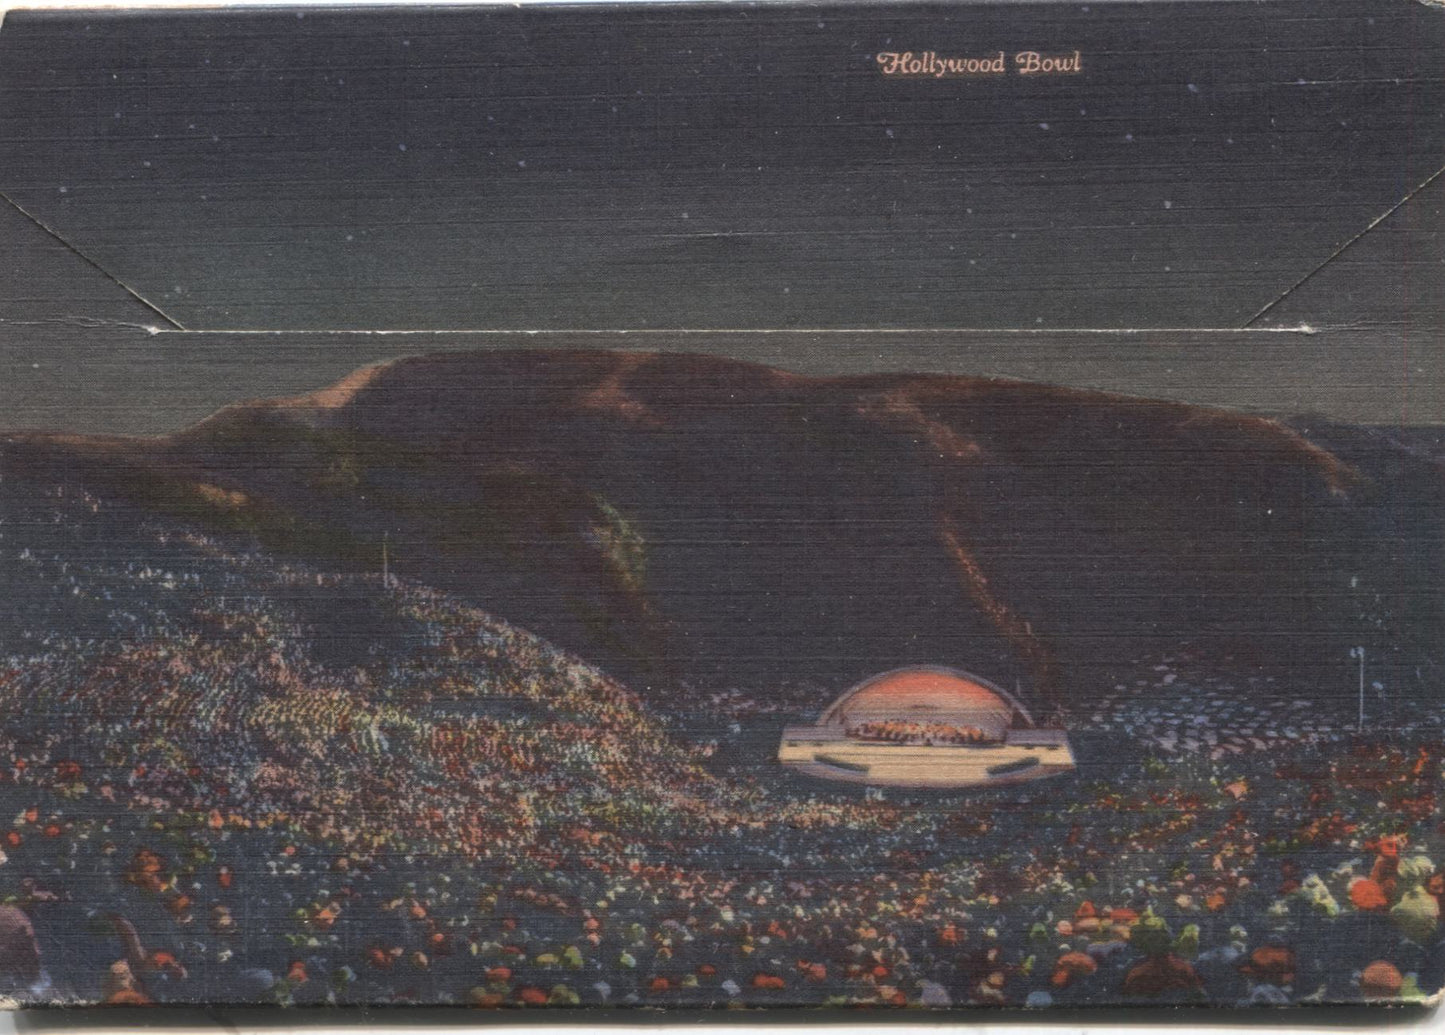 Hollywood, California Vintage Souvenir Postcard Folder